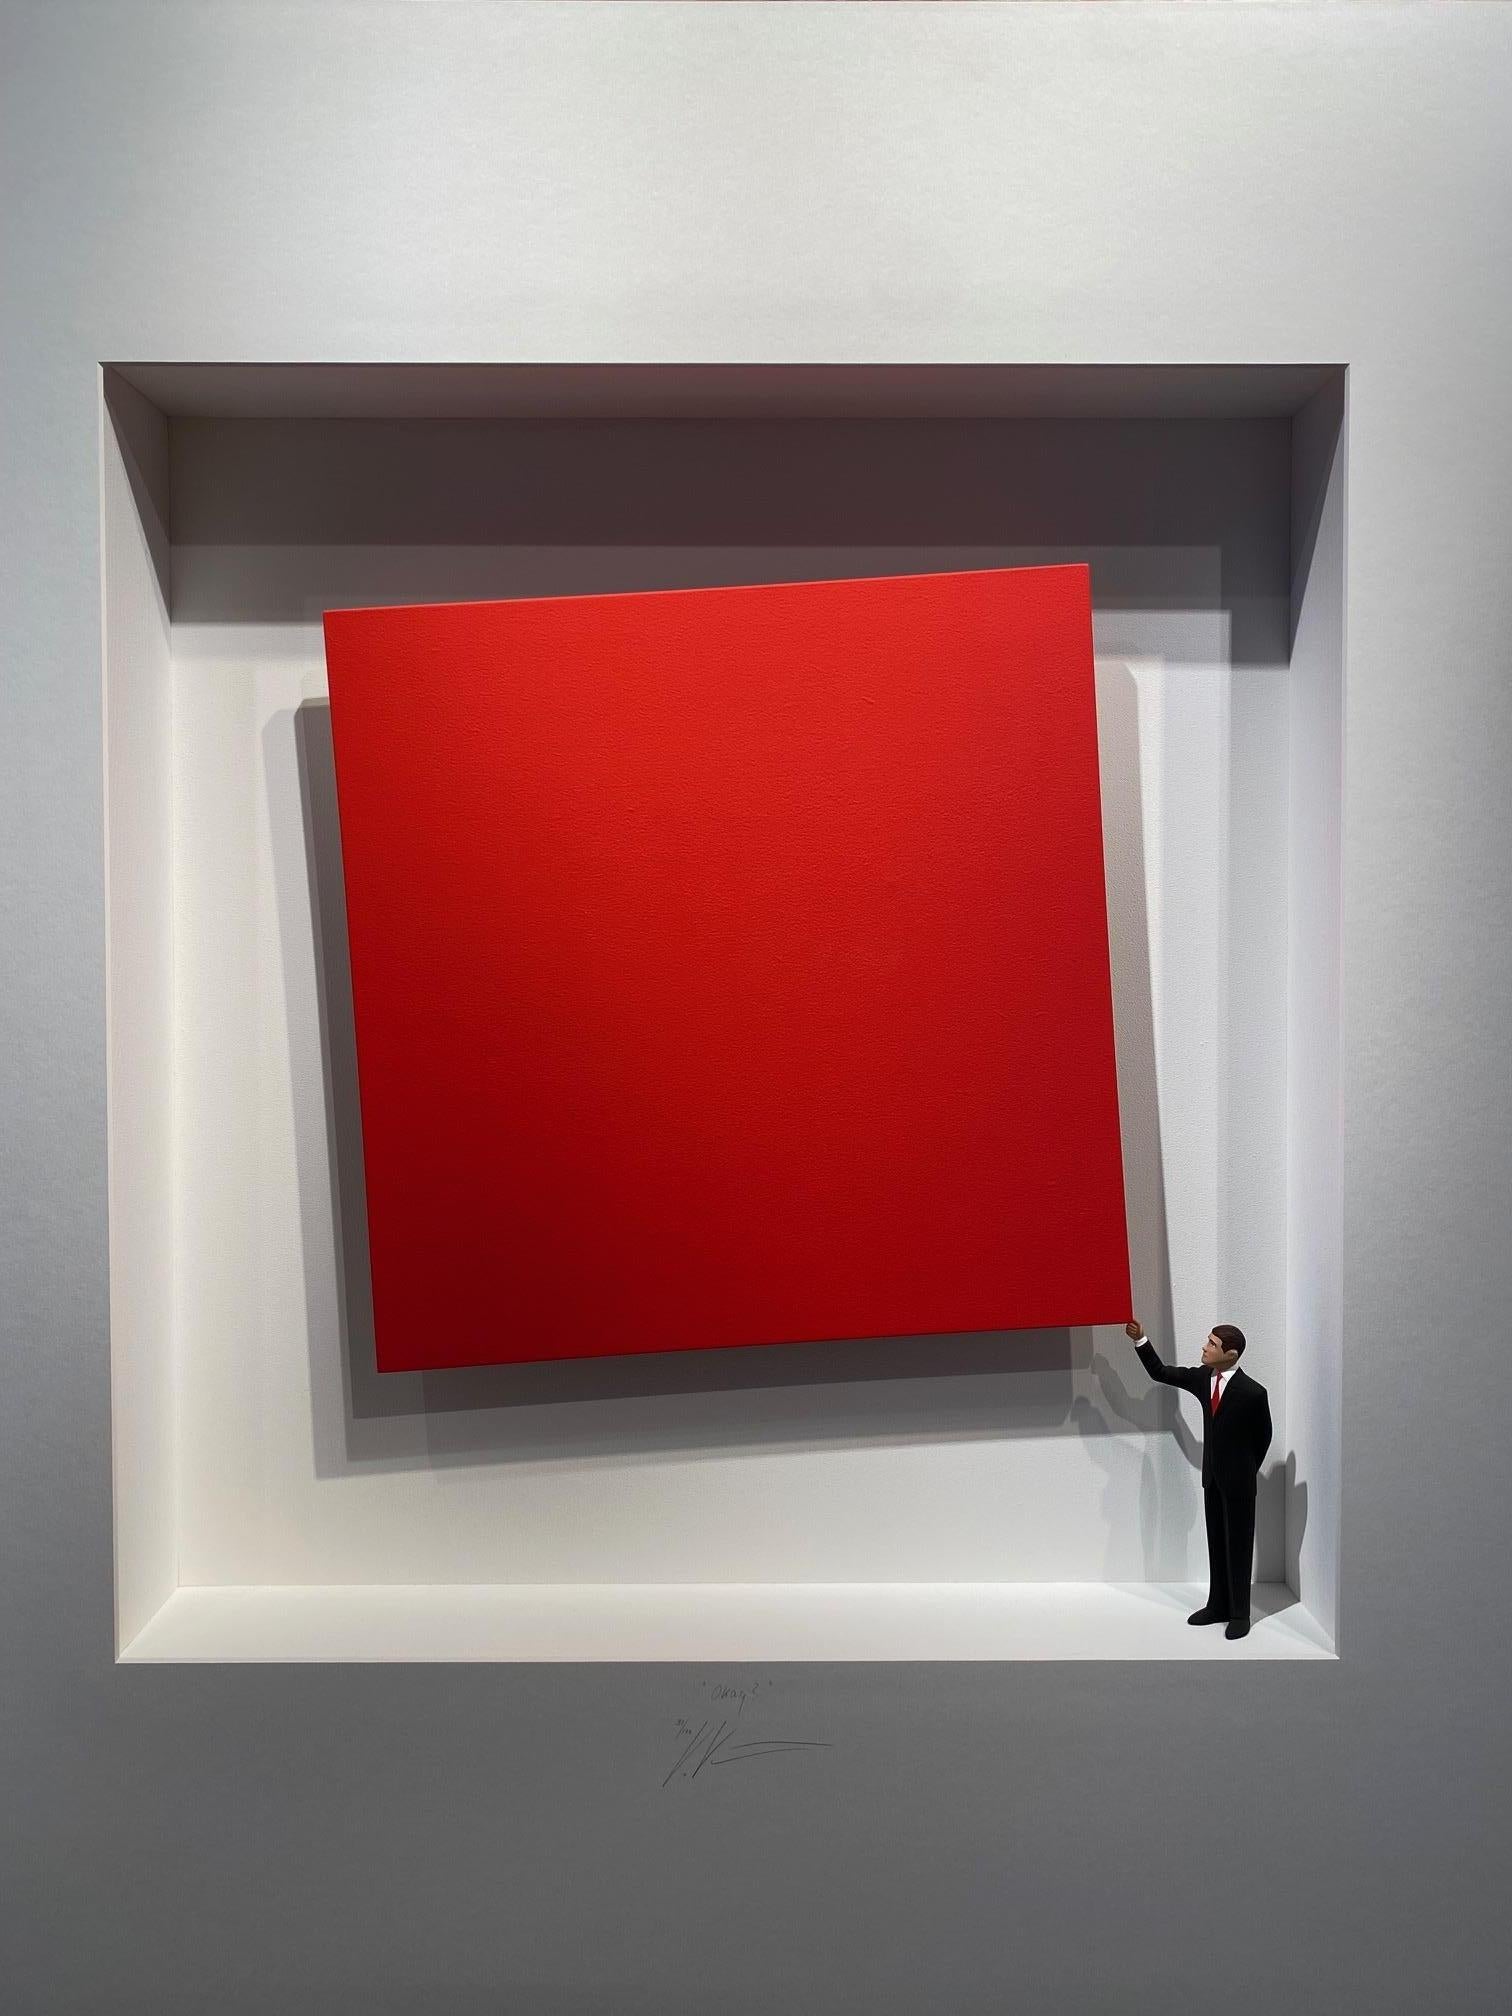 D'accord ? - mixed media art work, contemporary, minimalist red square constructivist